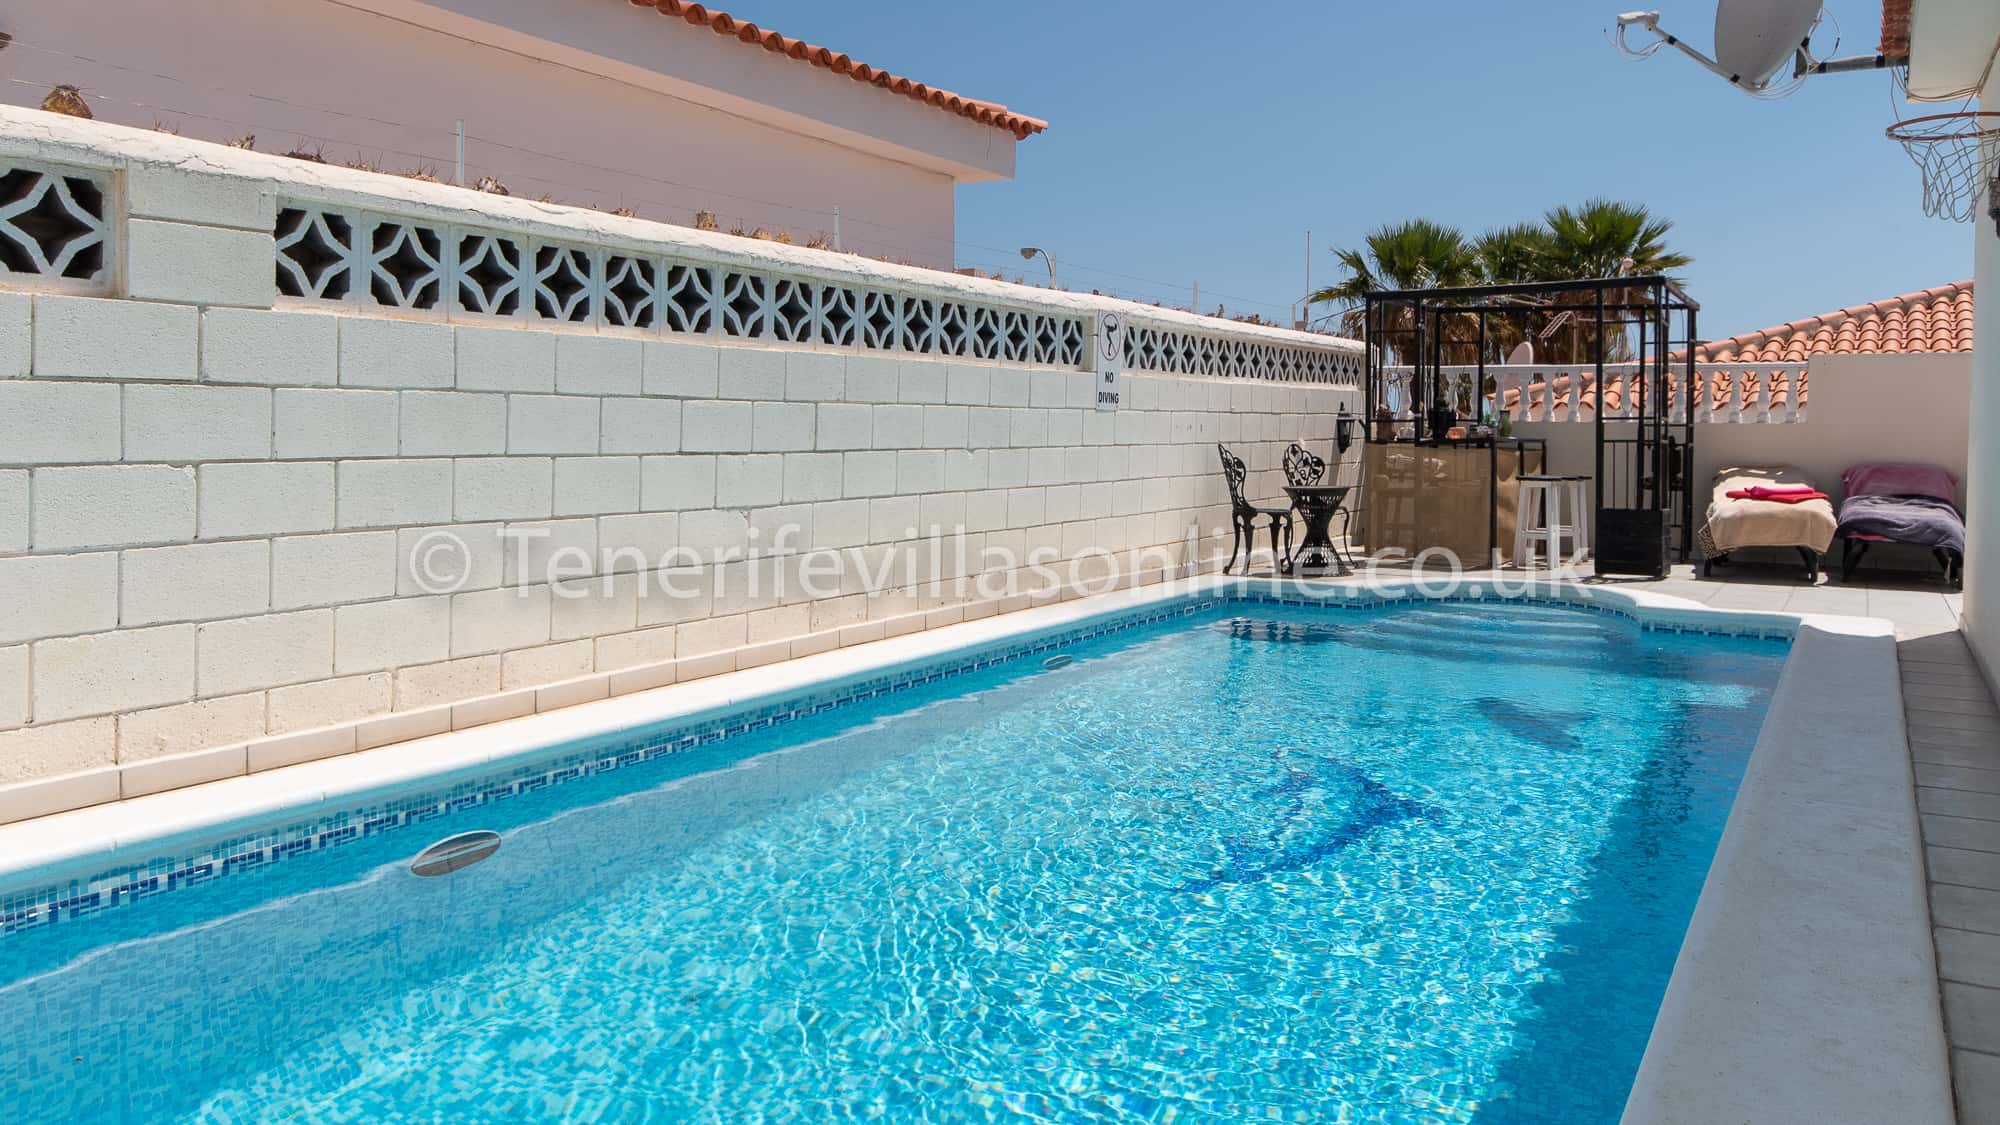 3 Bedroom Villas in Tenerife with private pool to rent | Villa Tenerife